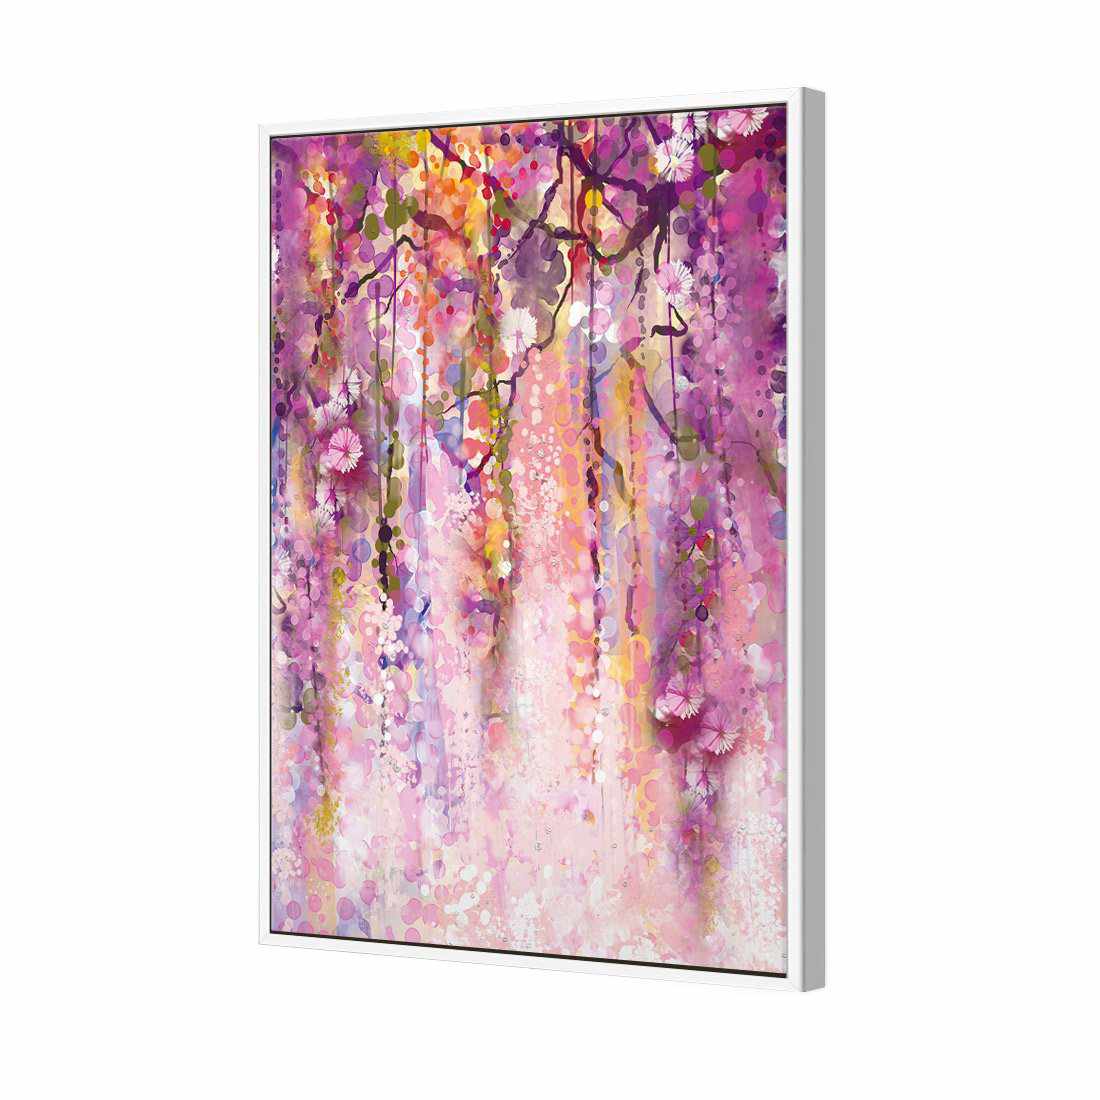 Lilac Dream (Rectangle) Canvas Art-Canvas-Wall Art Designs-45x30cm-Canvas - White Frame-Wall Art Designs